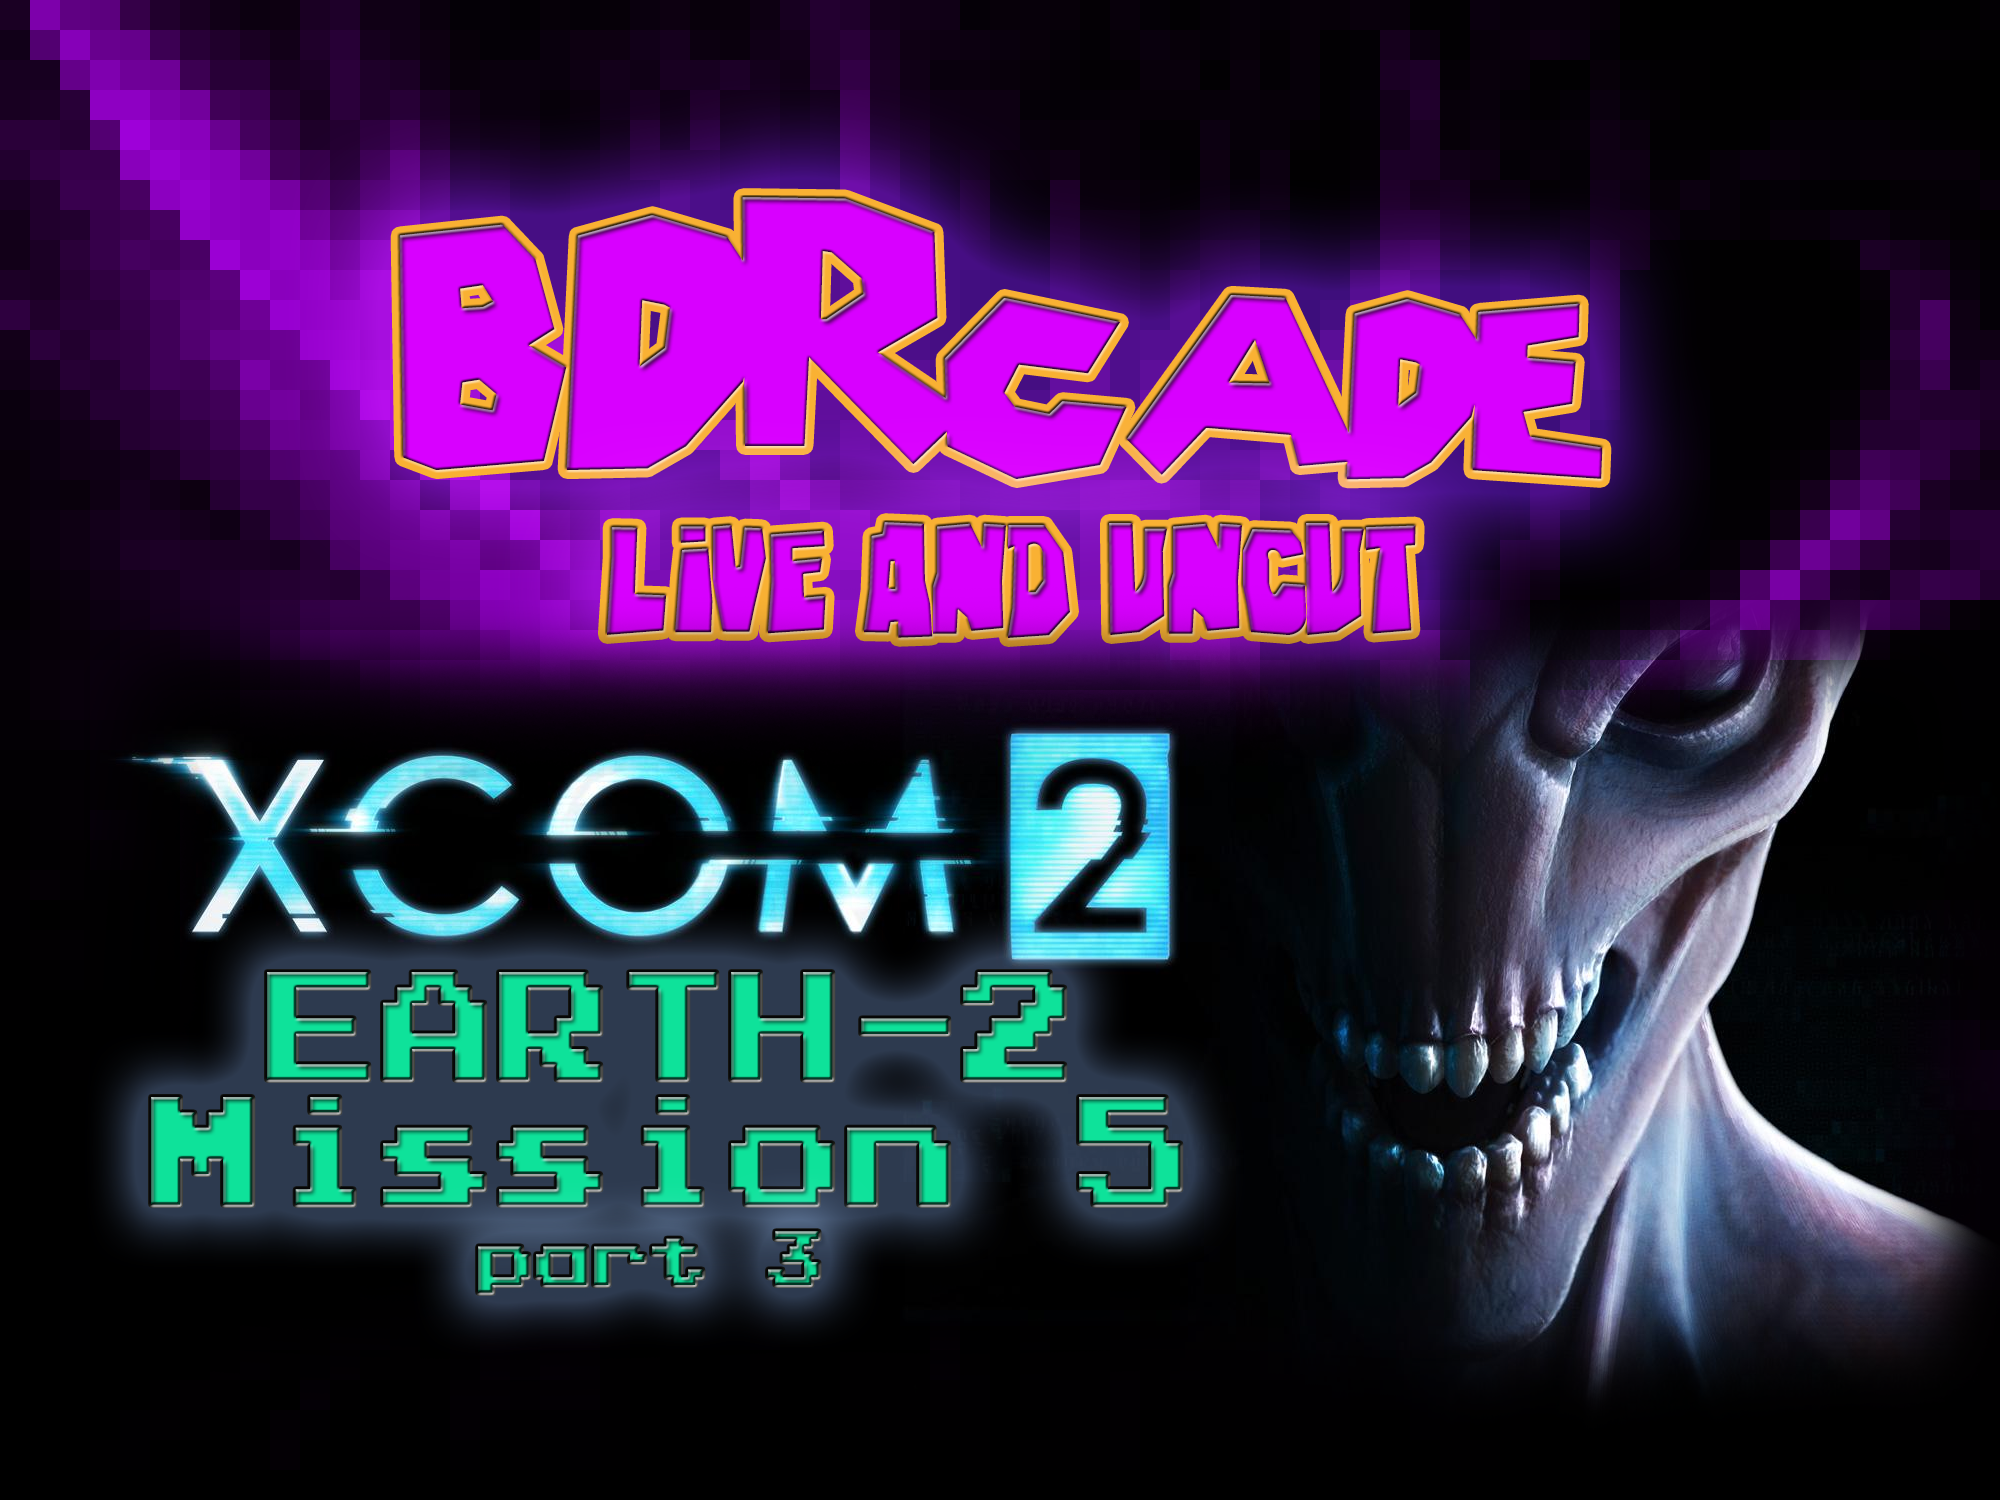 XCOM 2 (Earth-2) : Mission 5 Part 3 – A BDRcade Live Stream